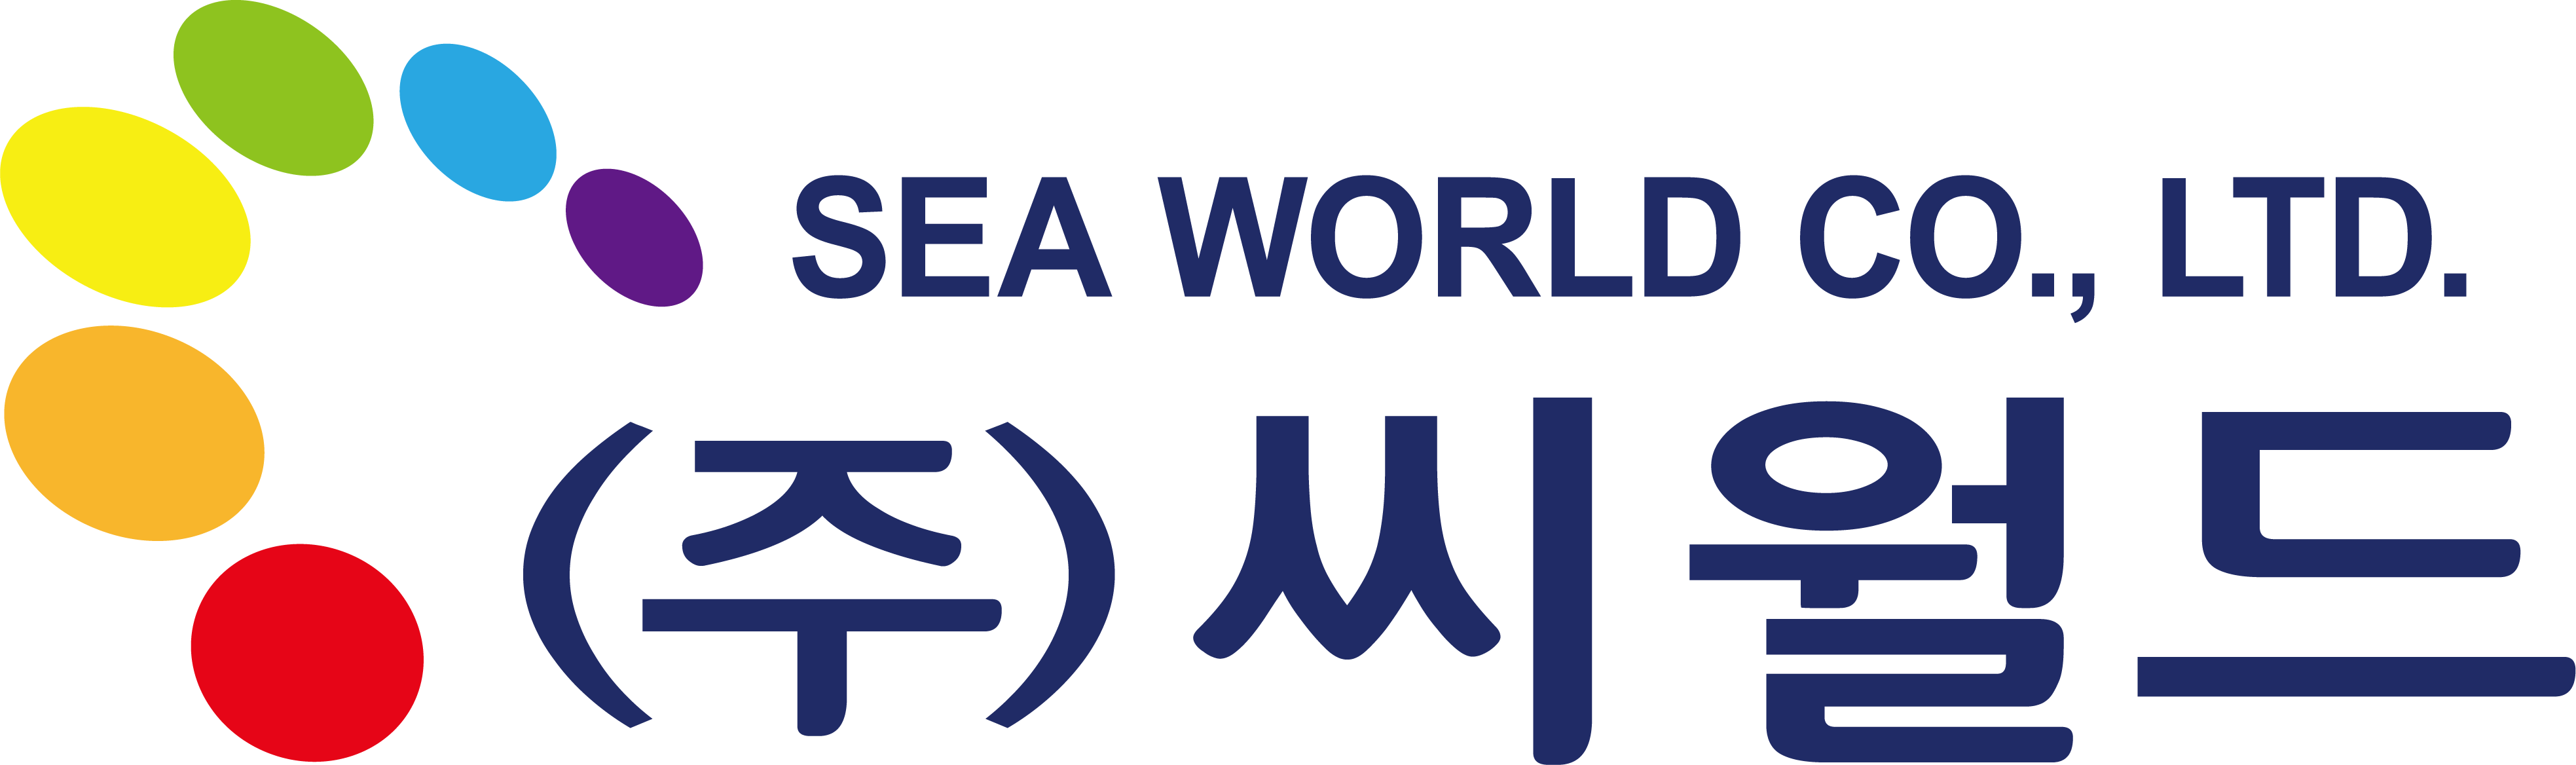 SEA WORLD CO., LTD.